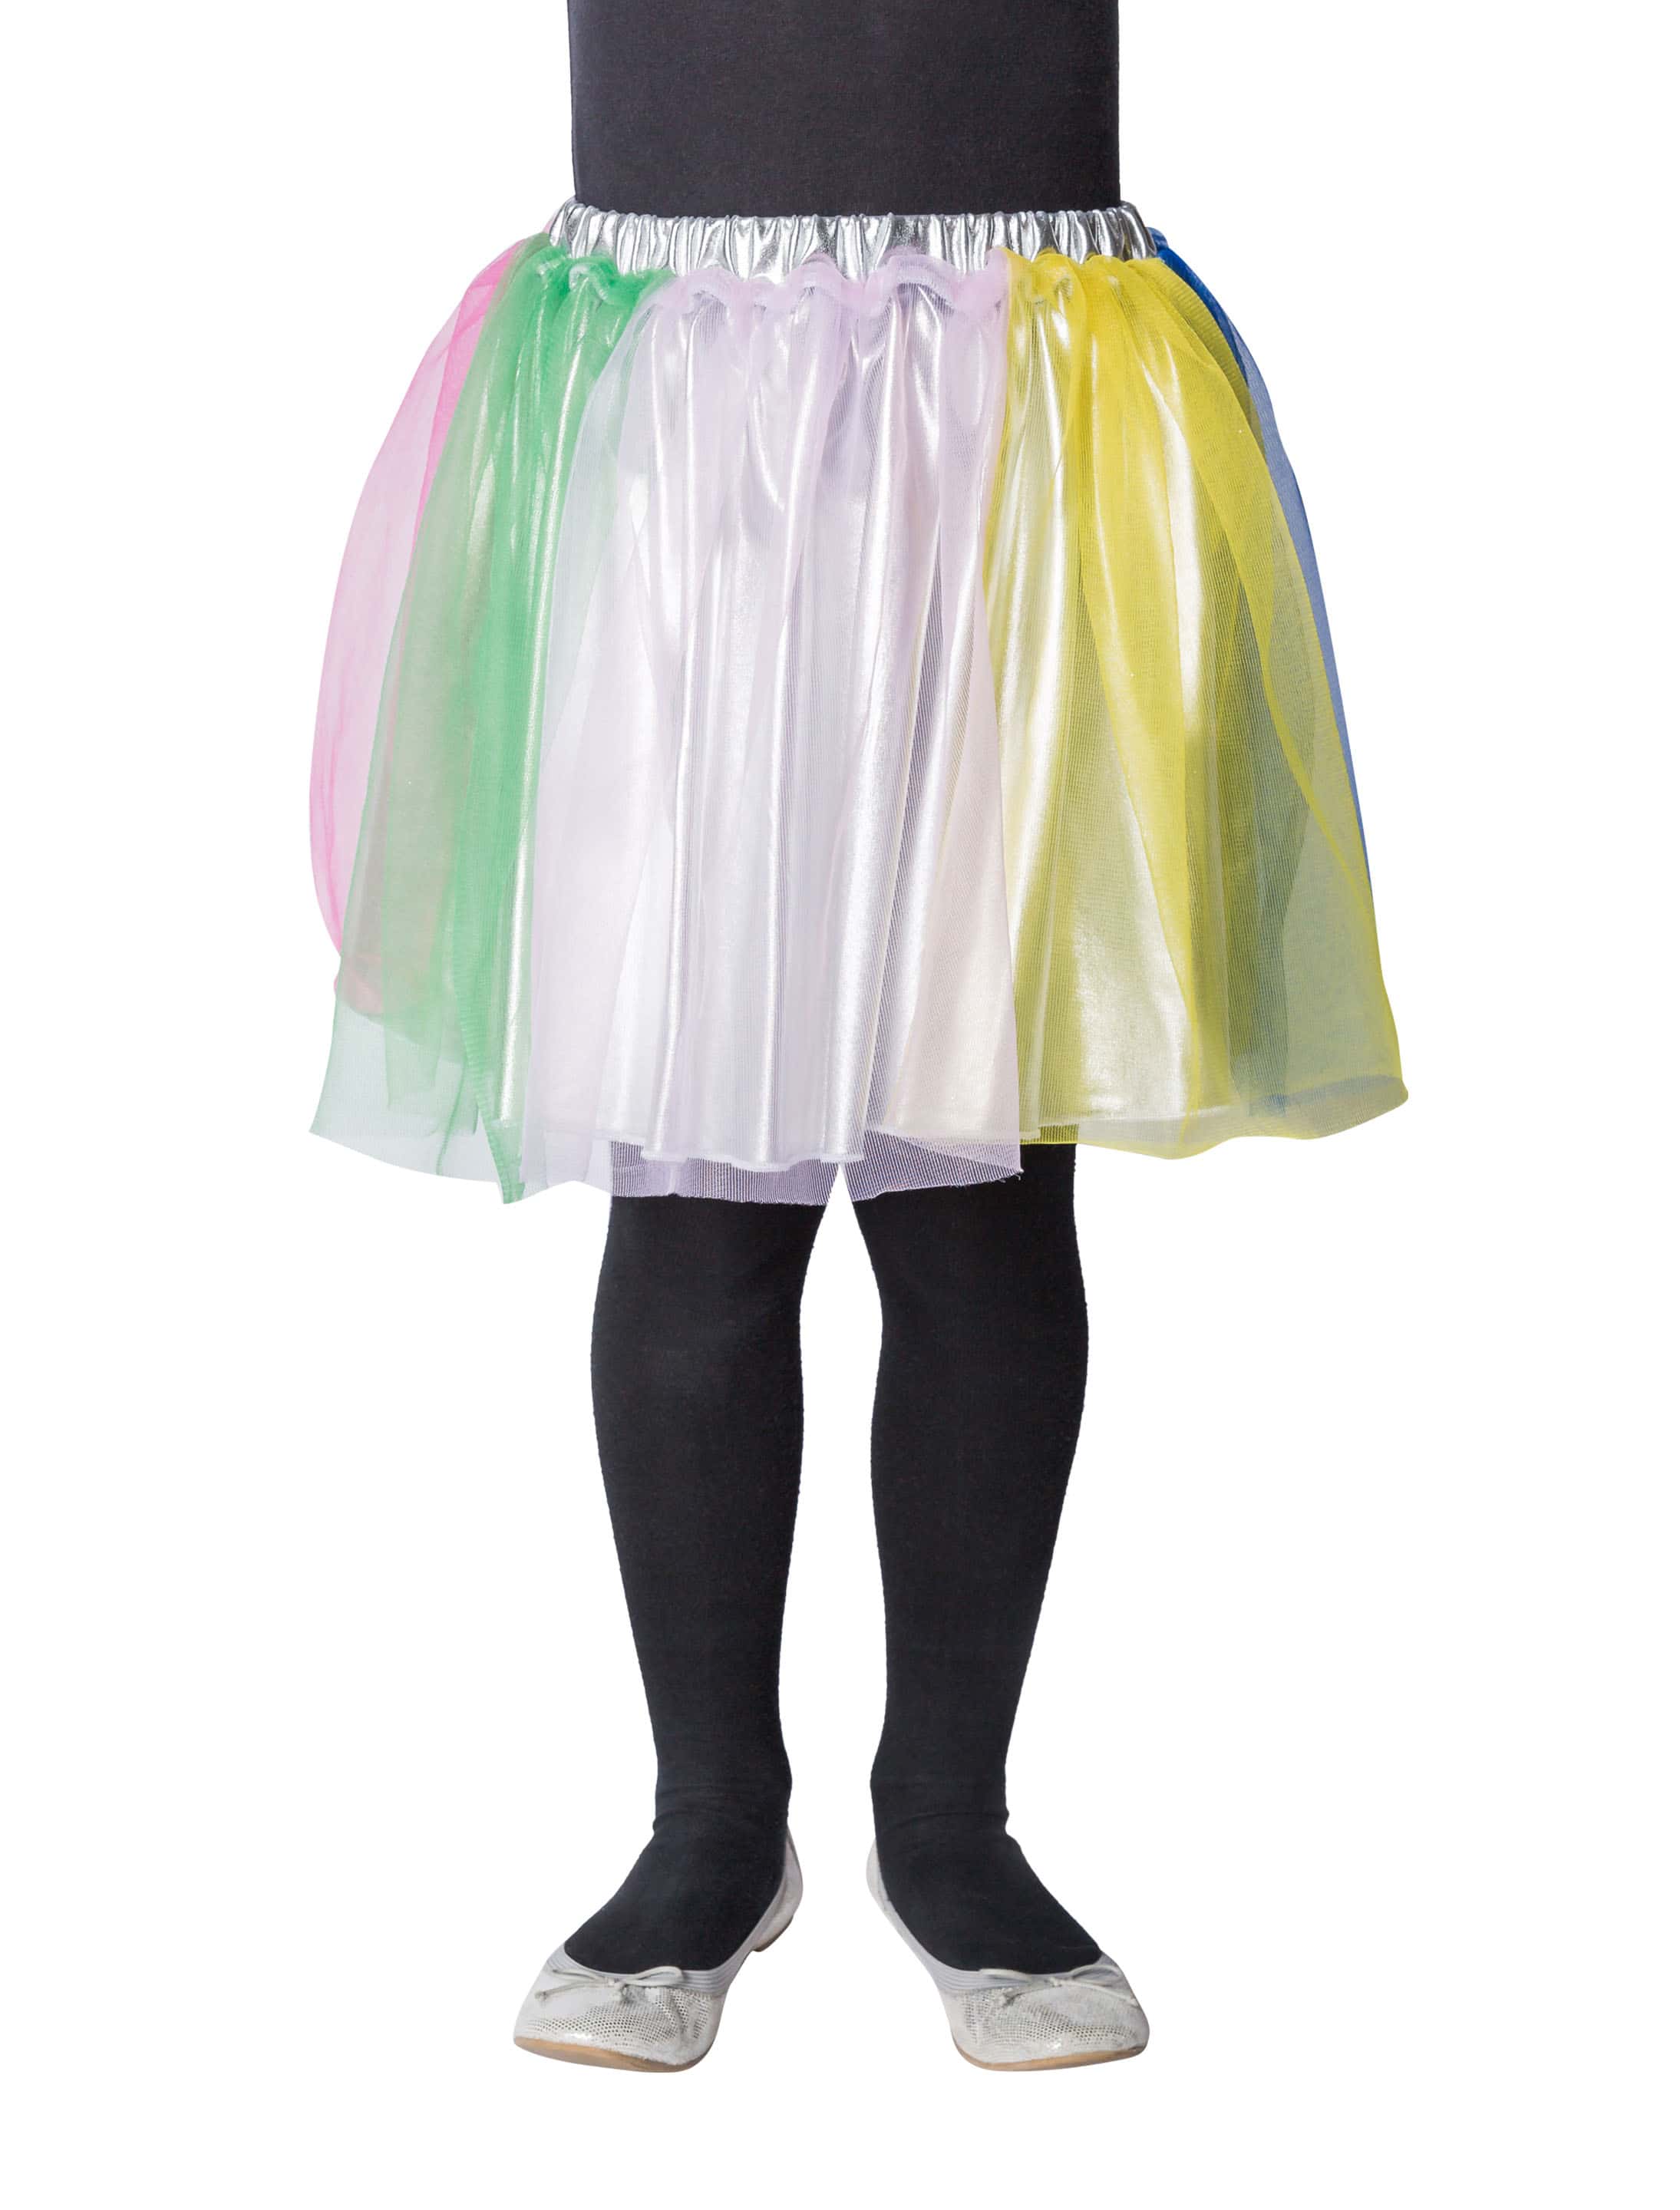 Petticoat Regenbogen Kinder silber